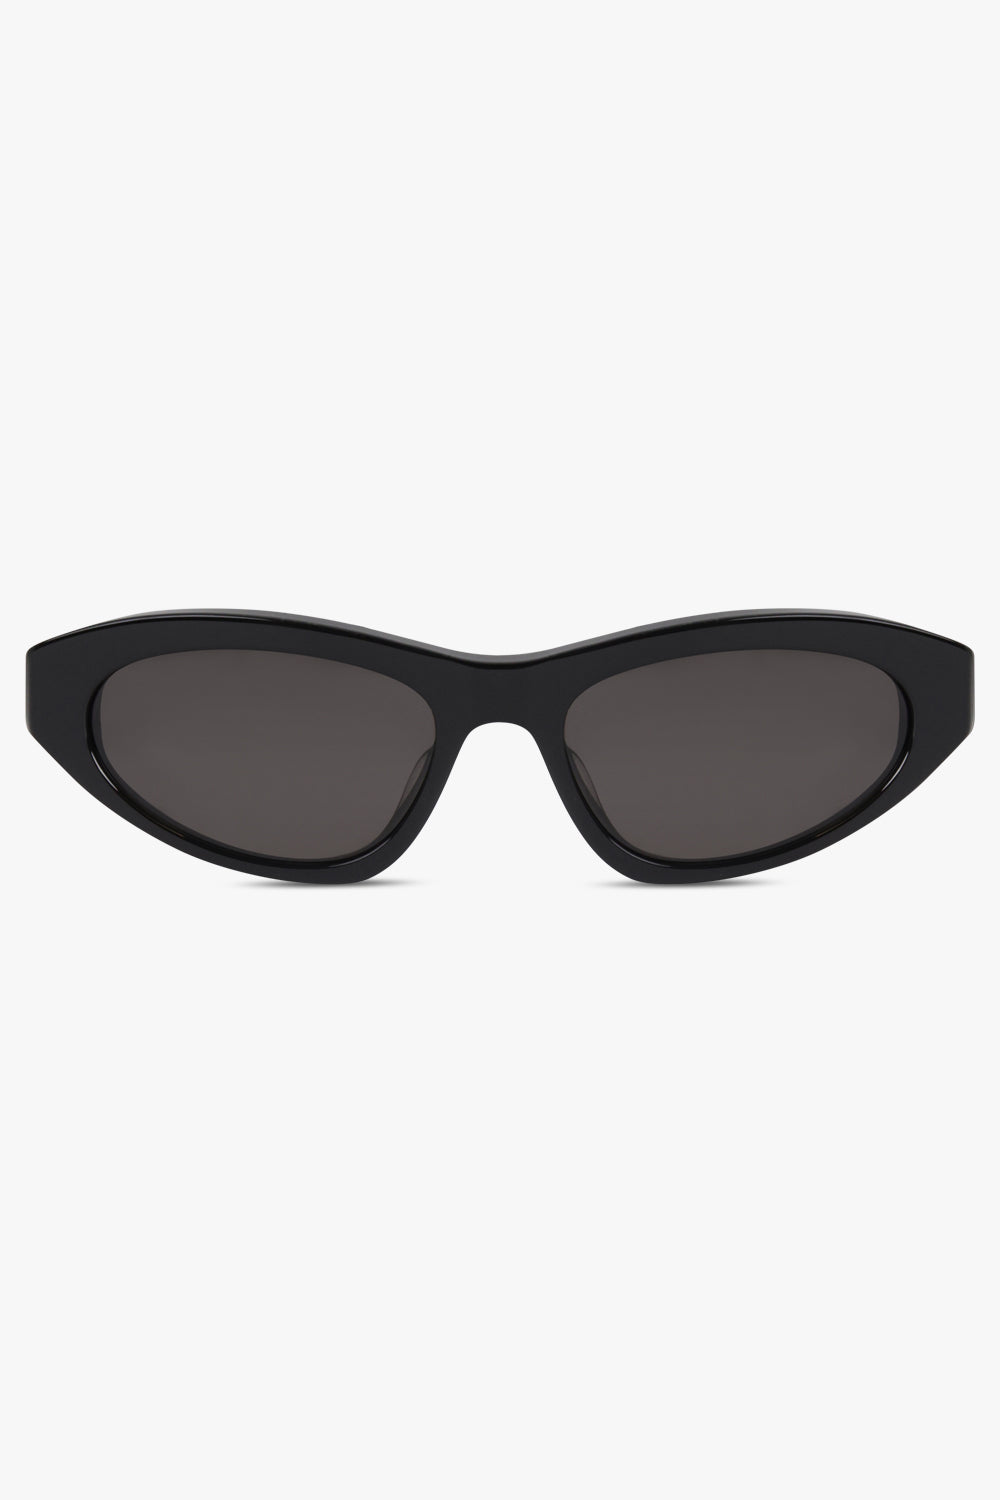 BALENCIAGA ACCESSORIES BLACK / BLACK Twist Arm Sunglasses | Black